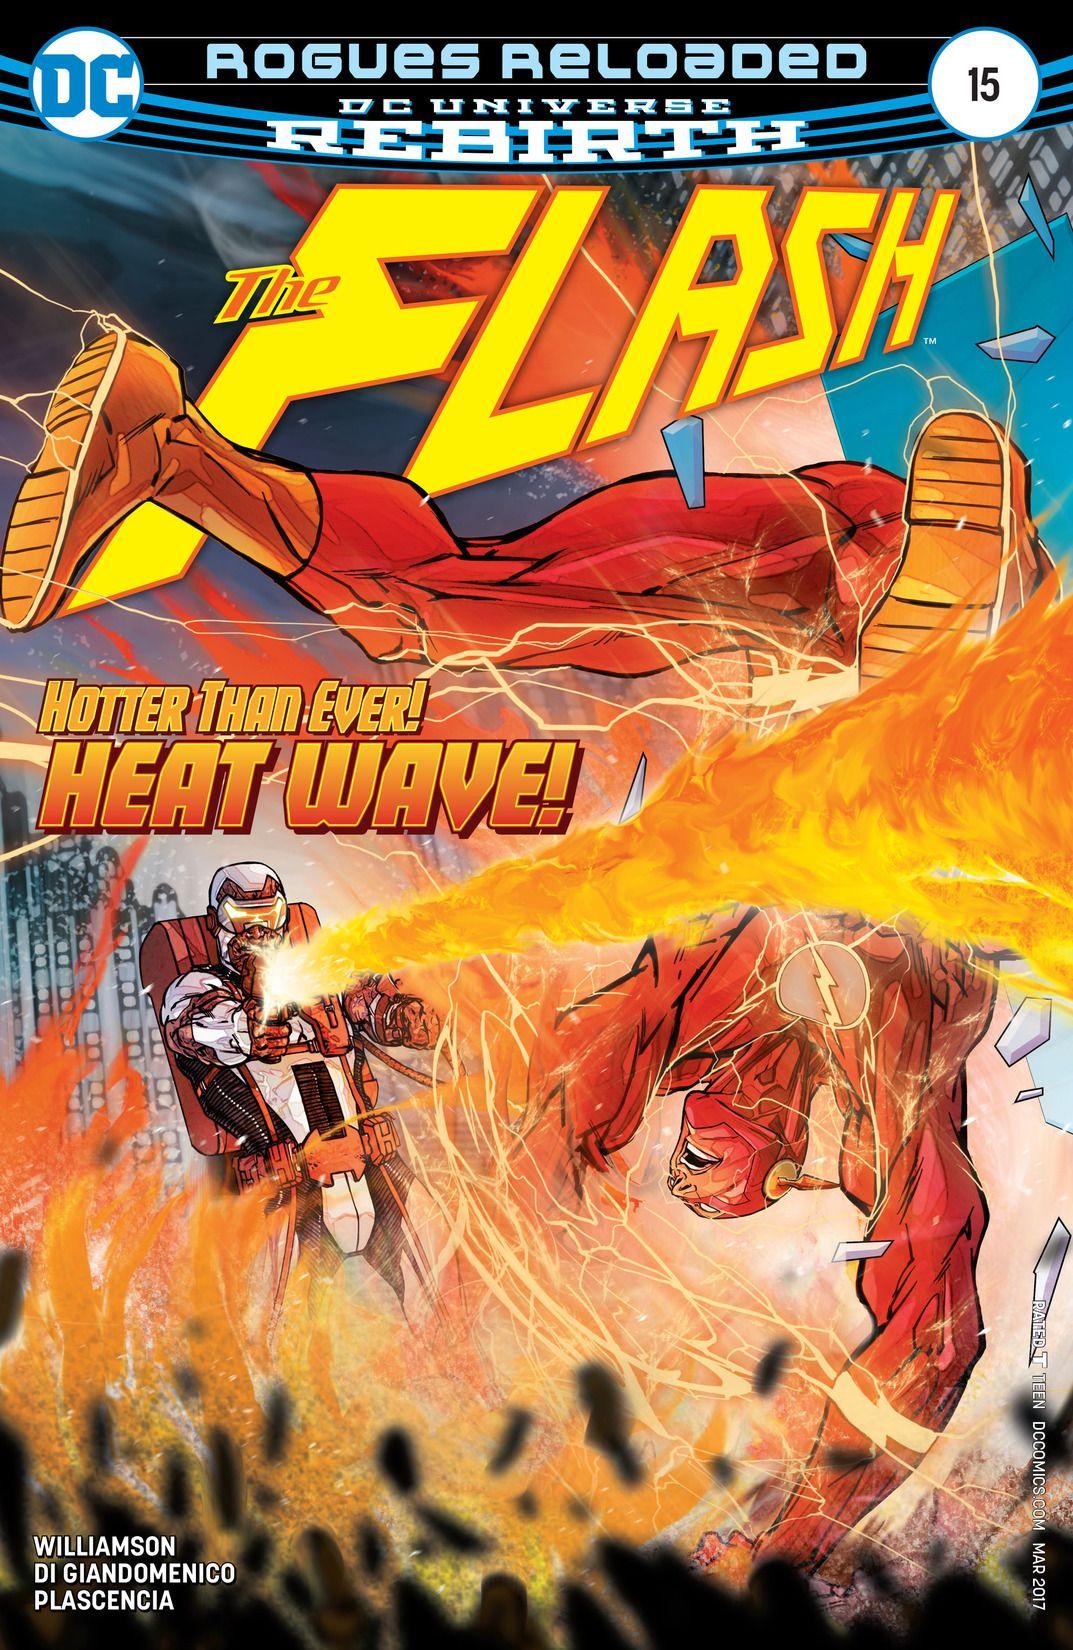 The Flash Vol. 5 #15